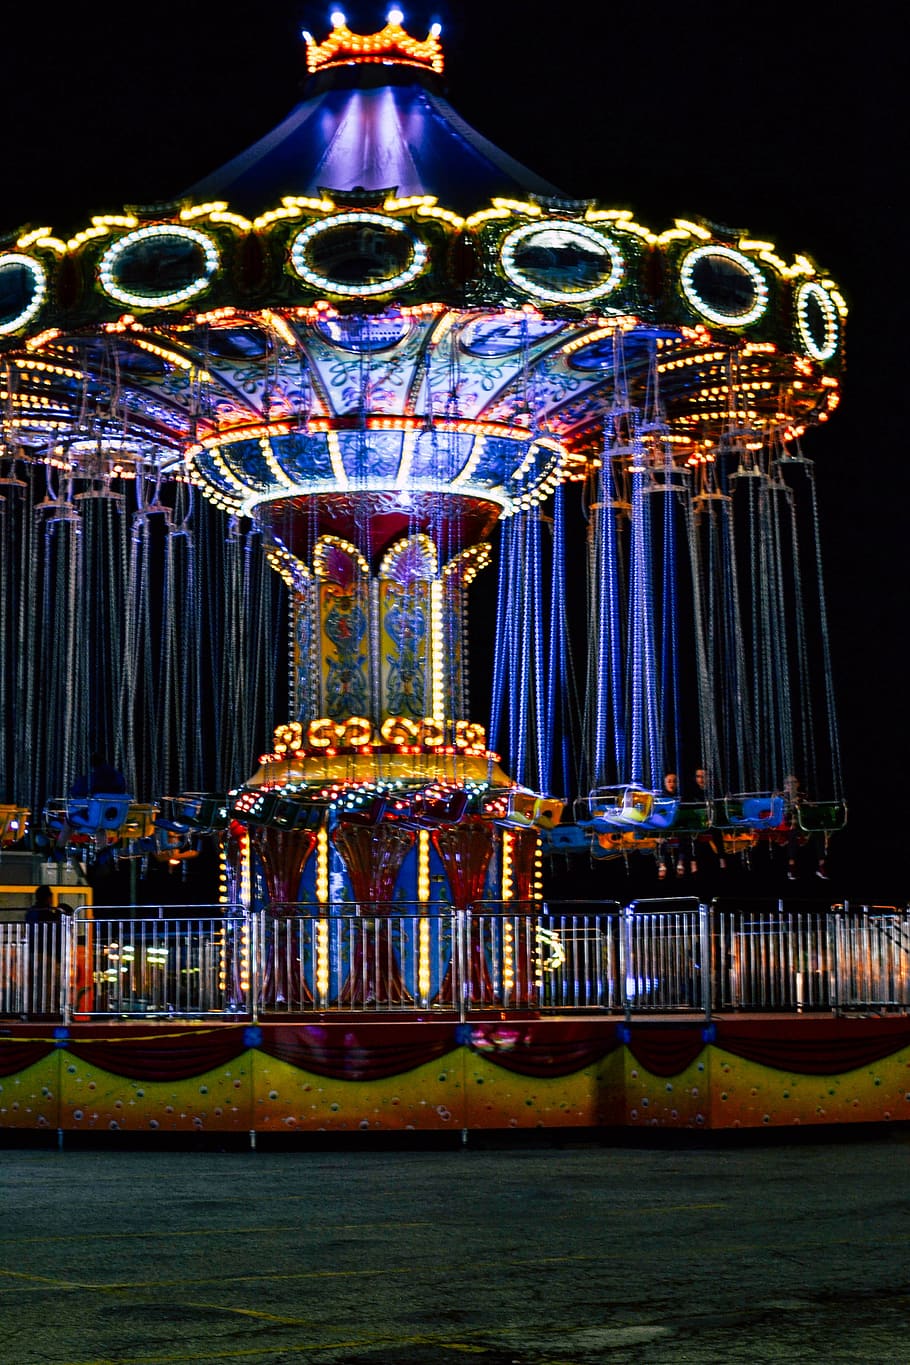 carnival, carnival ride, swing ride, ride, fairground, merry-go-round, night carnival, lights, swing, swings